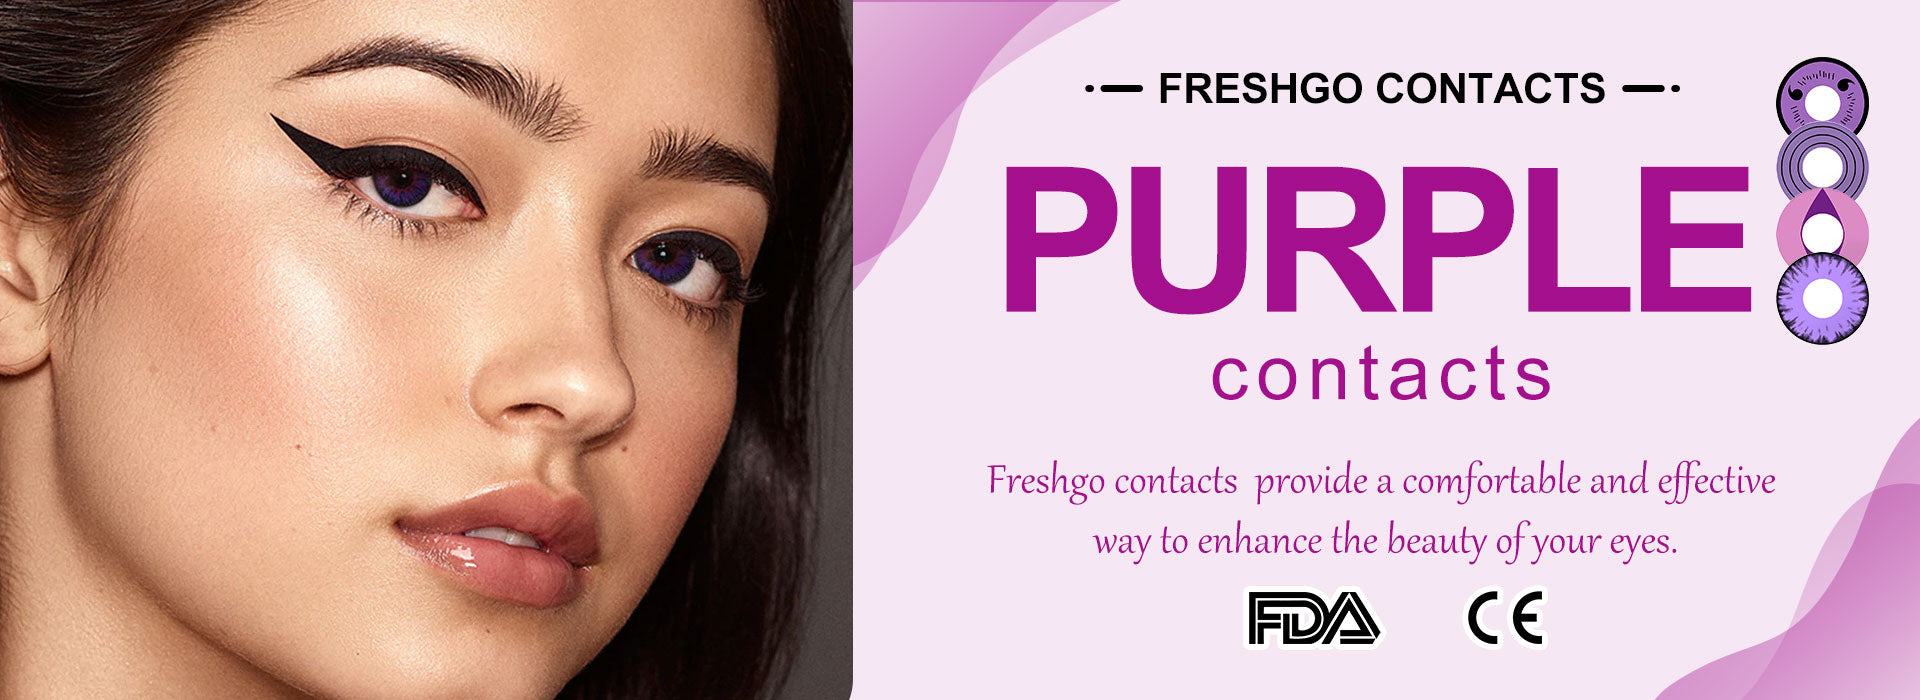 purple contact lenses